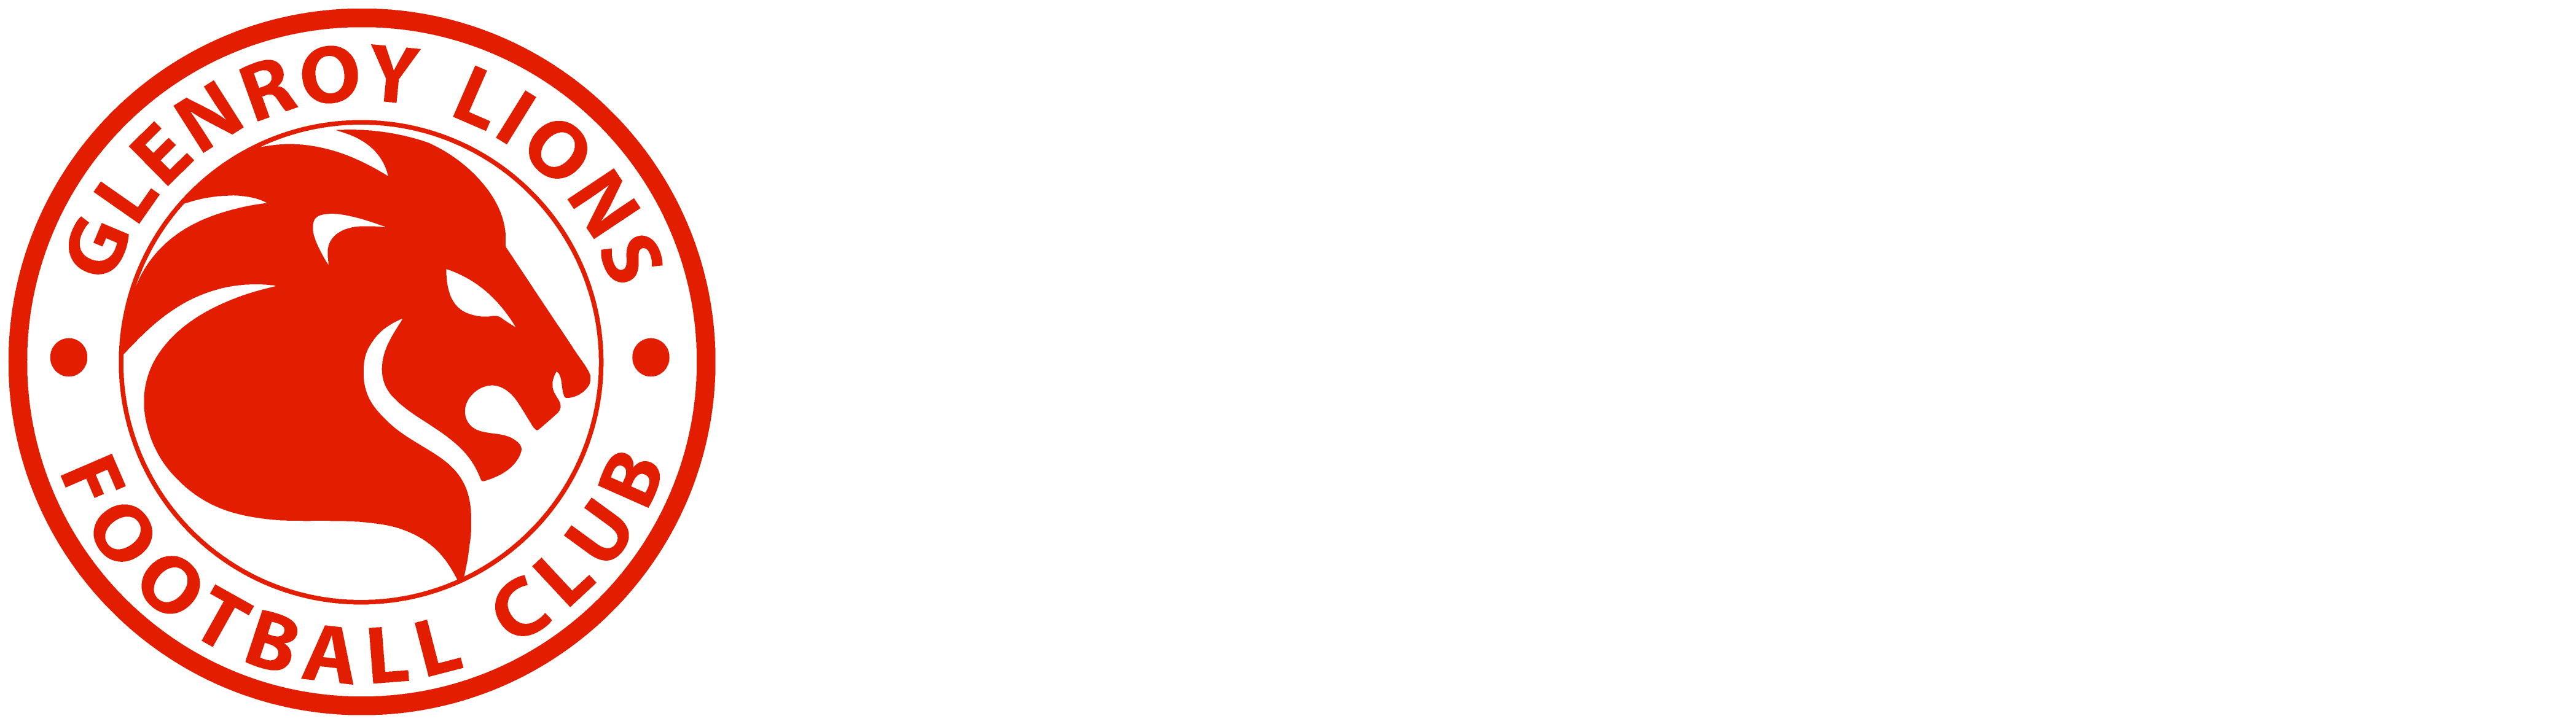 Glenroy Lions FC, Melbourne, Australia